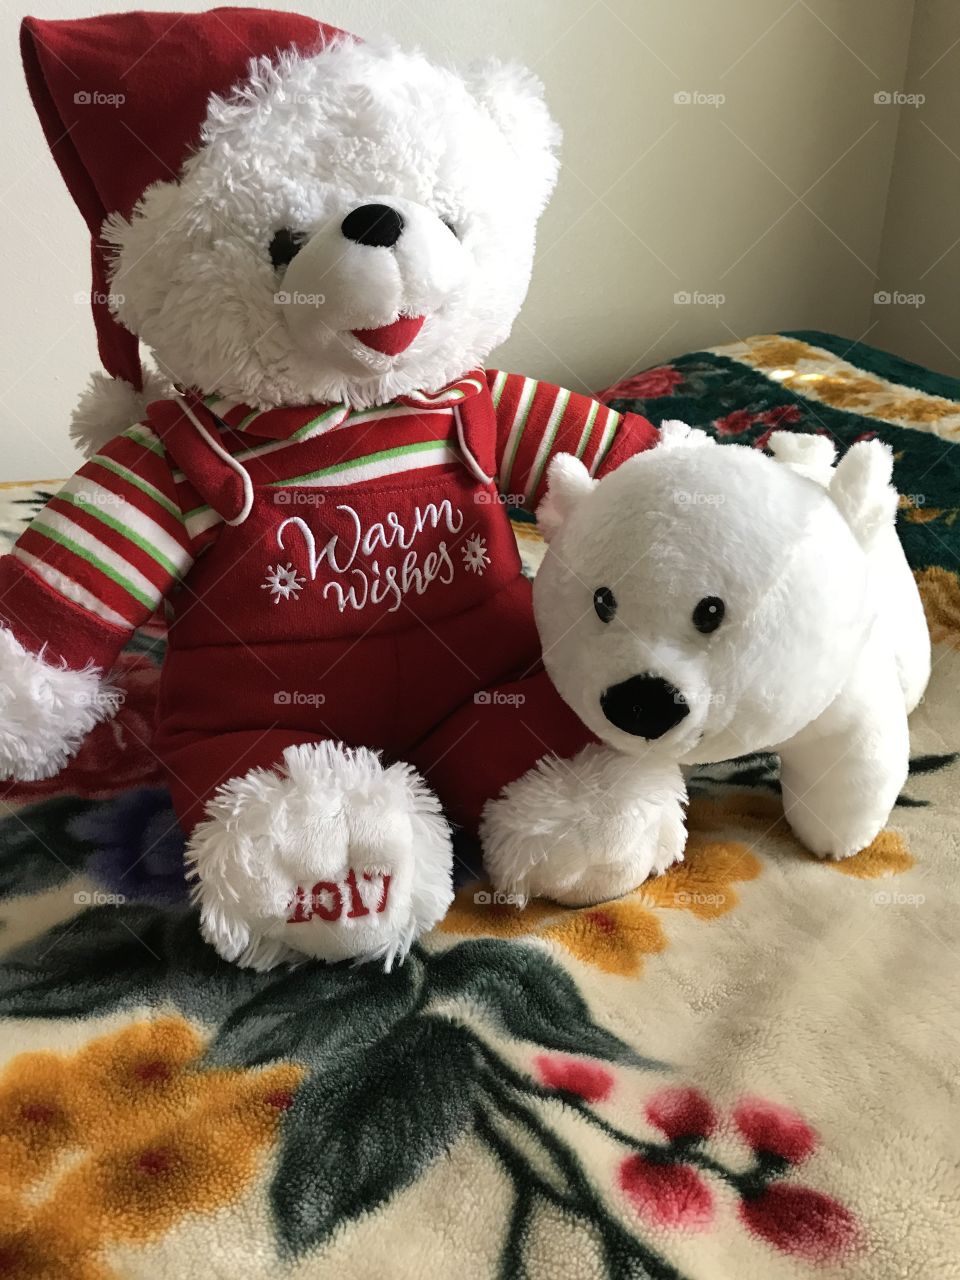 Fluffy stuffed animals- cute bear and doggy